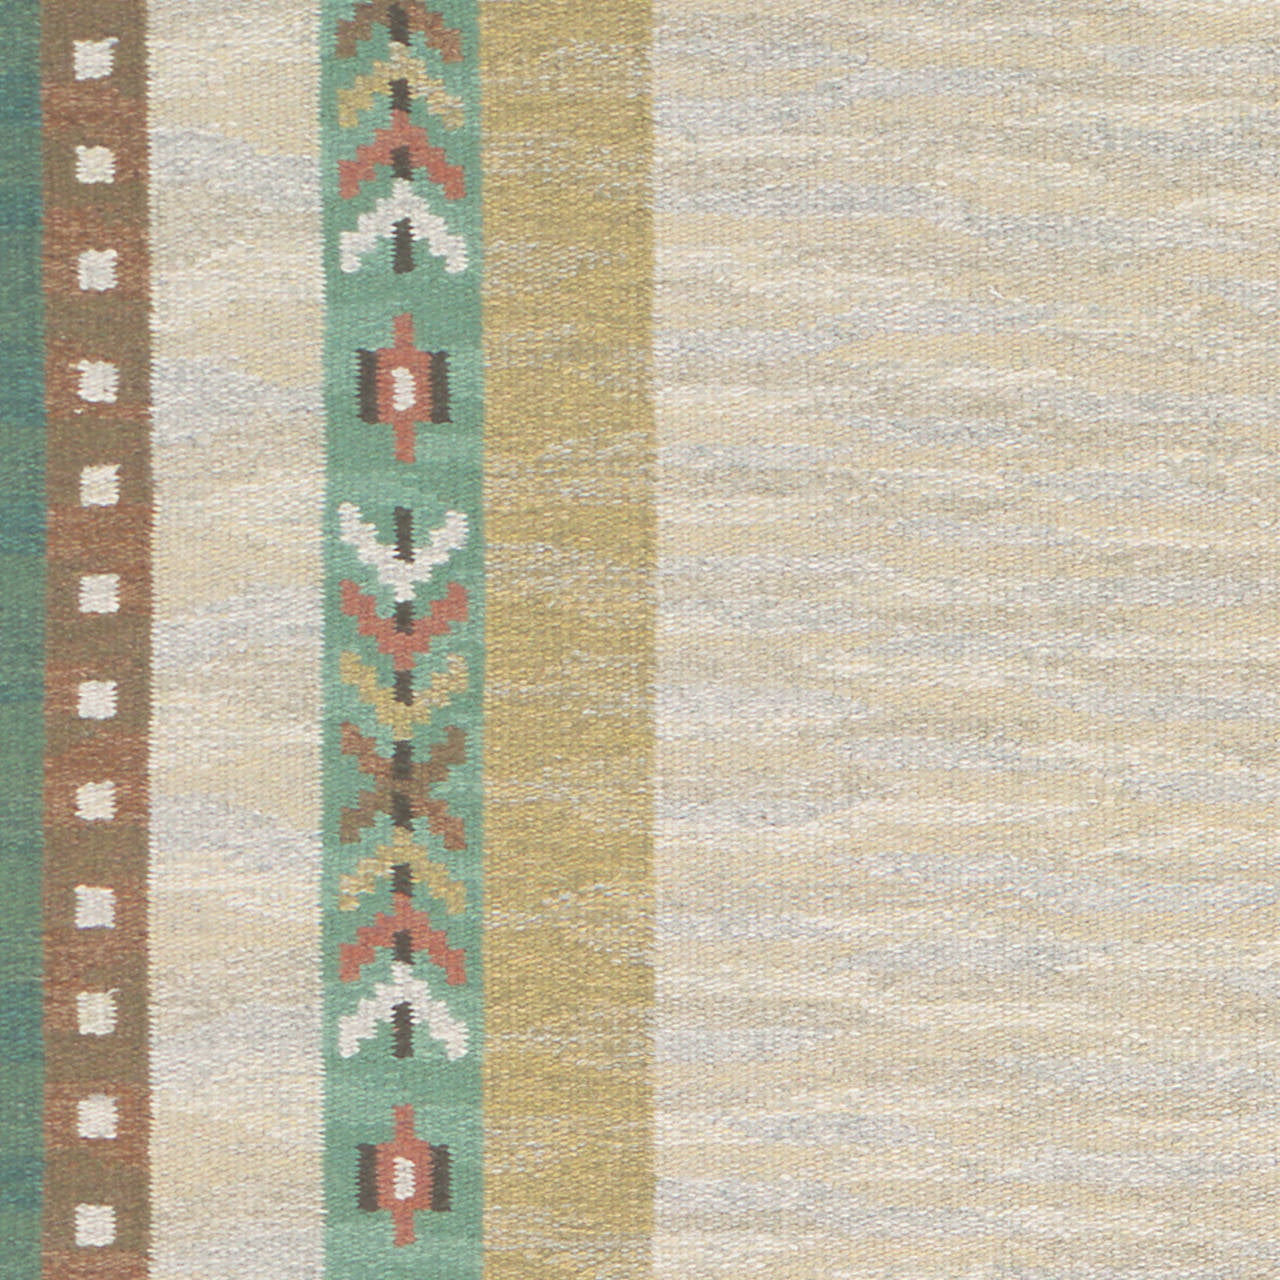 20th Century Swedish Flat-Weave Carpet
Sweden, circa 1950
Swedish flat-weave technique
Initialed 'TBP'.